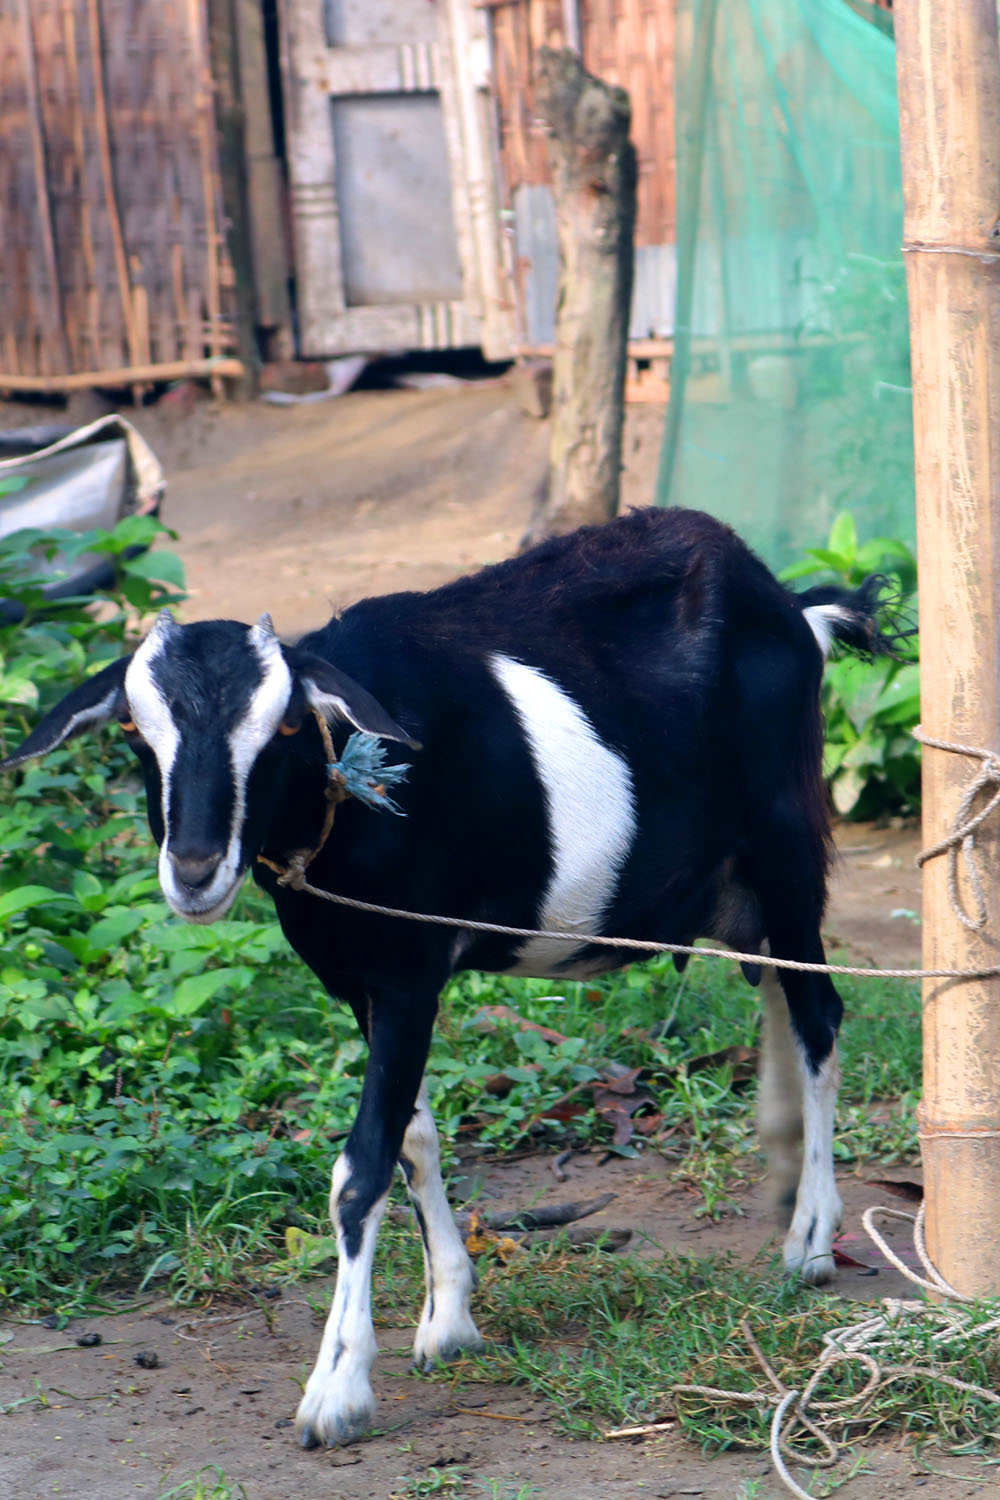 Goat Khasi photography in bangladesh Nimbu Tree pinterest preview image.